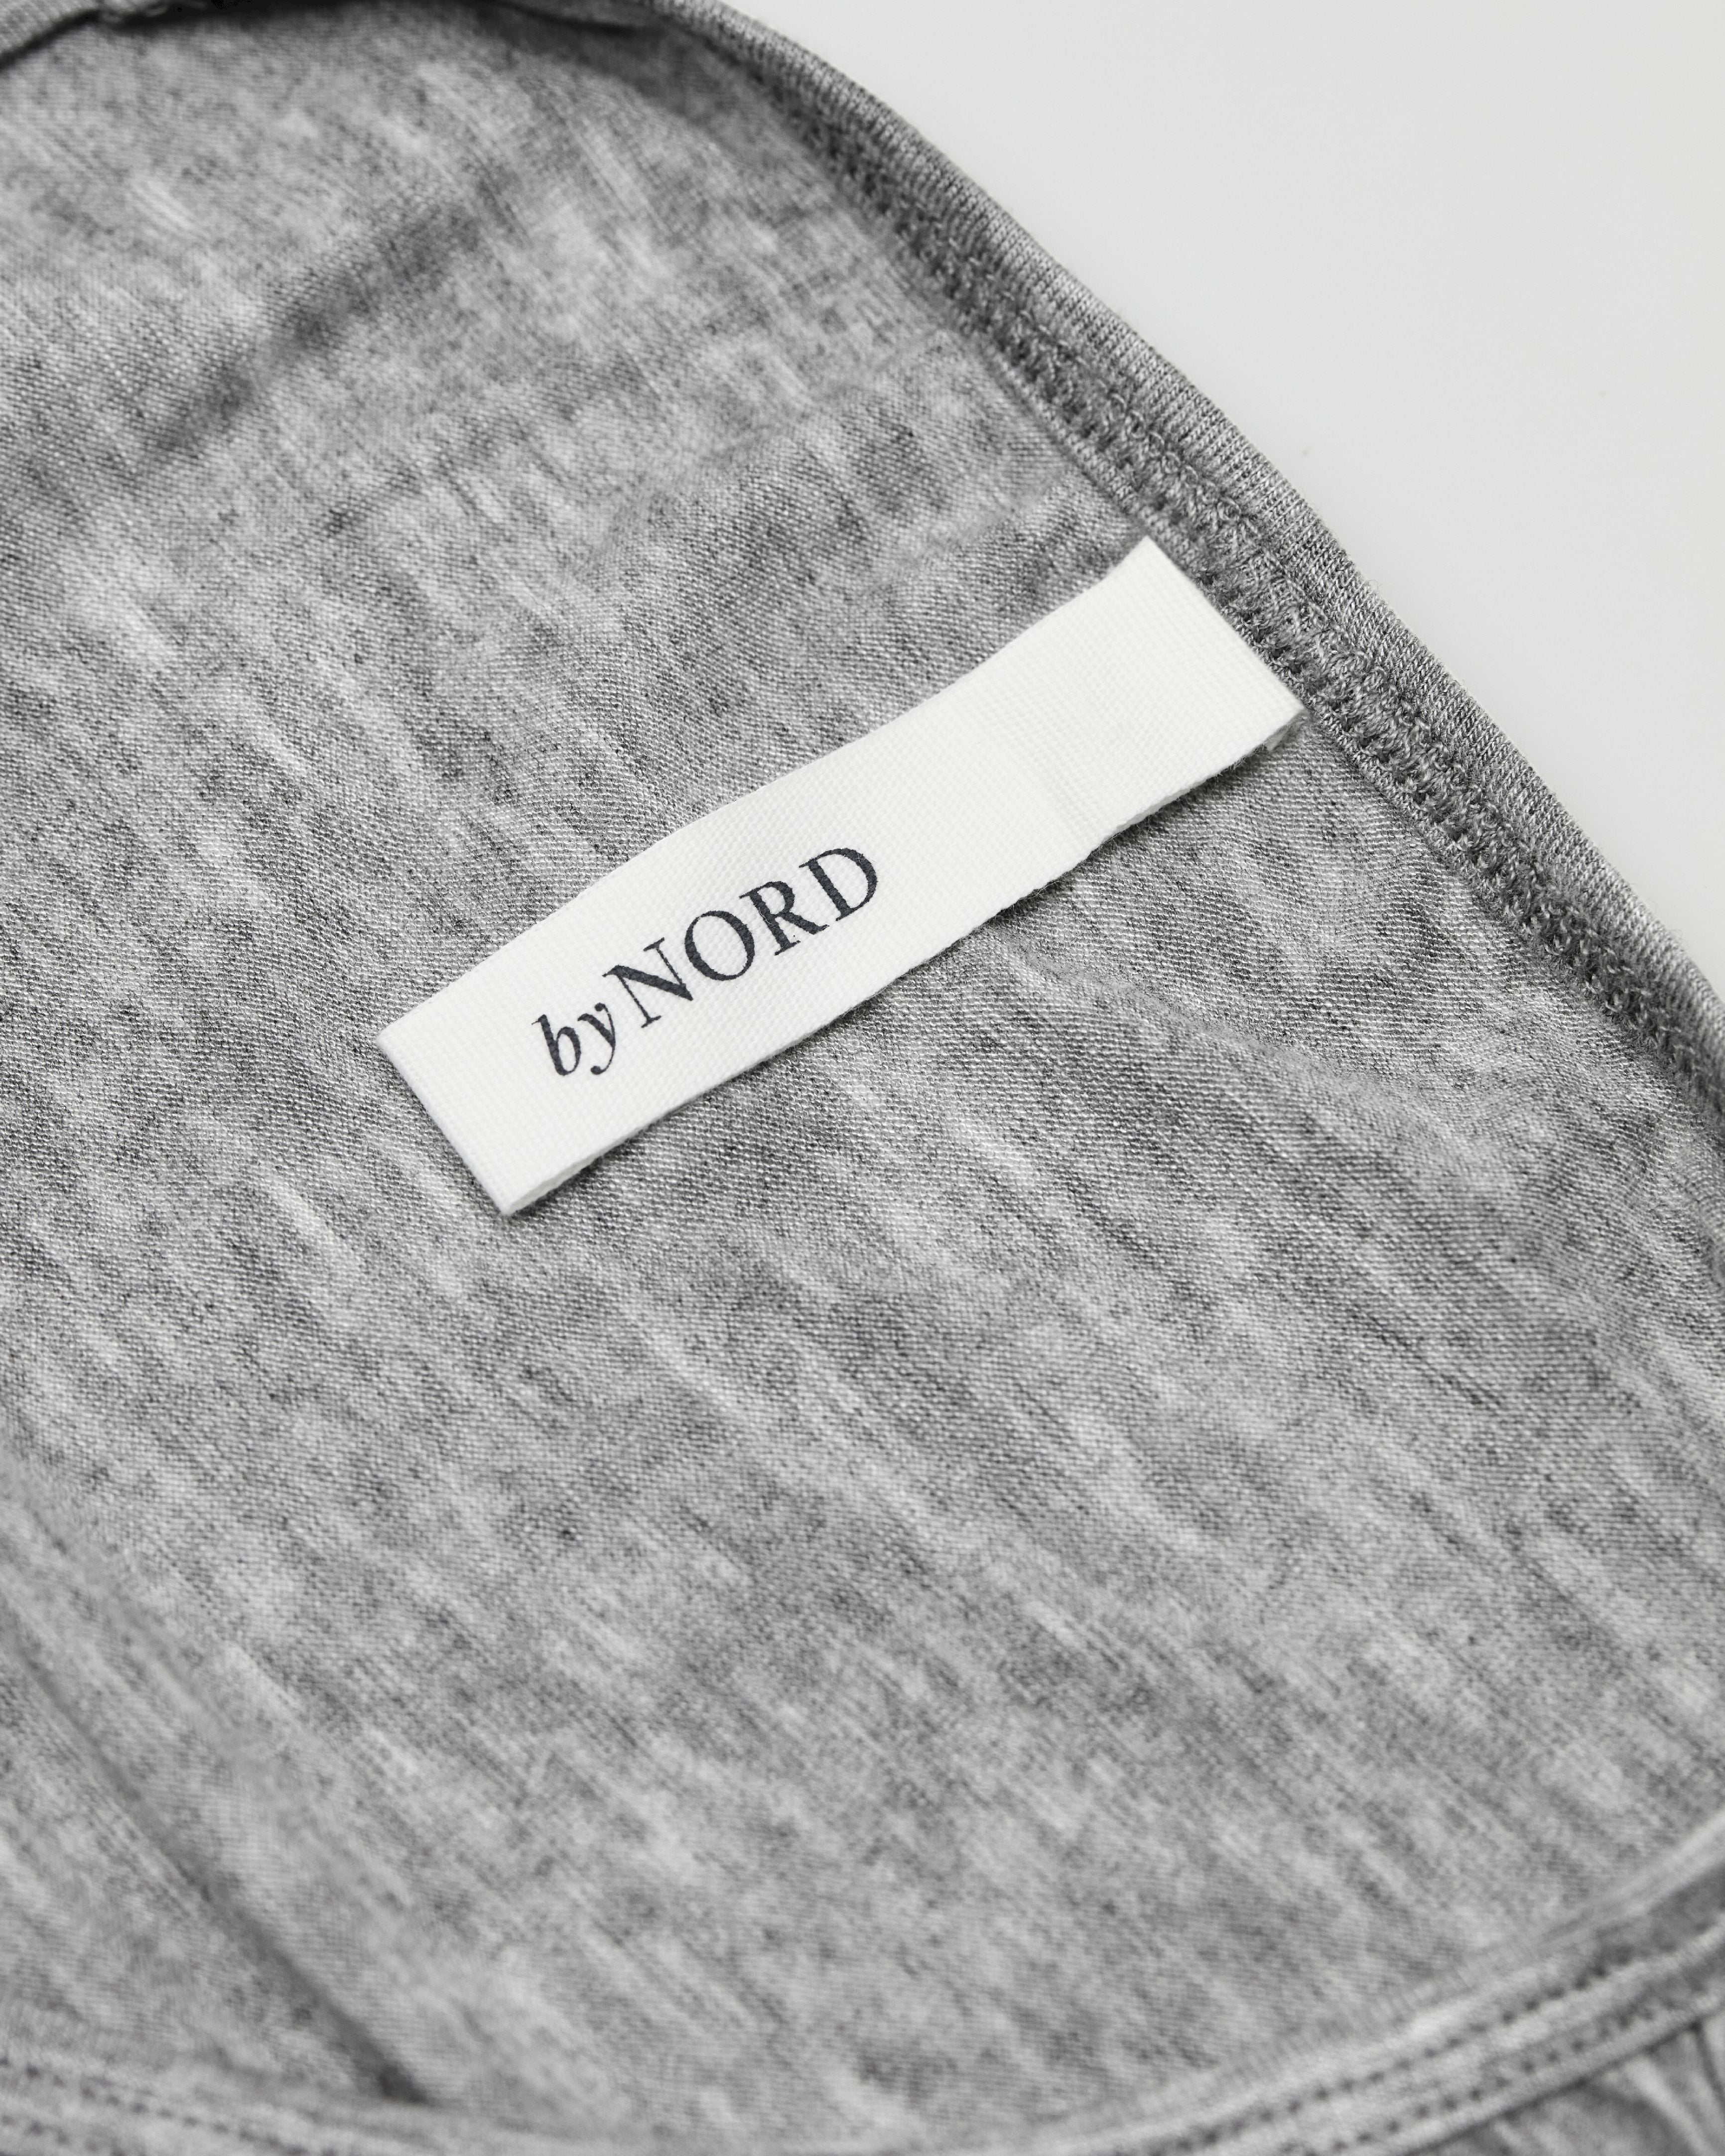 Par Nord Winter Astrid Loungewear L / XL, Jupe